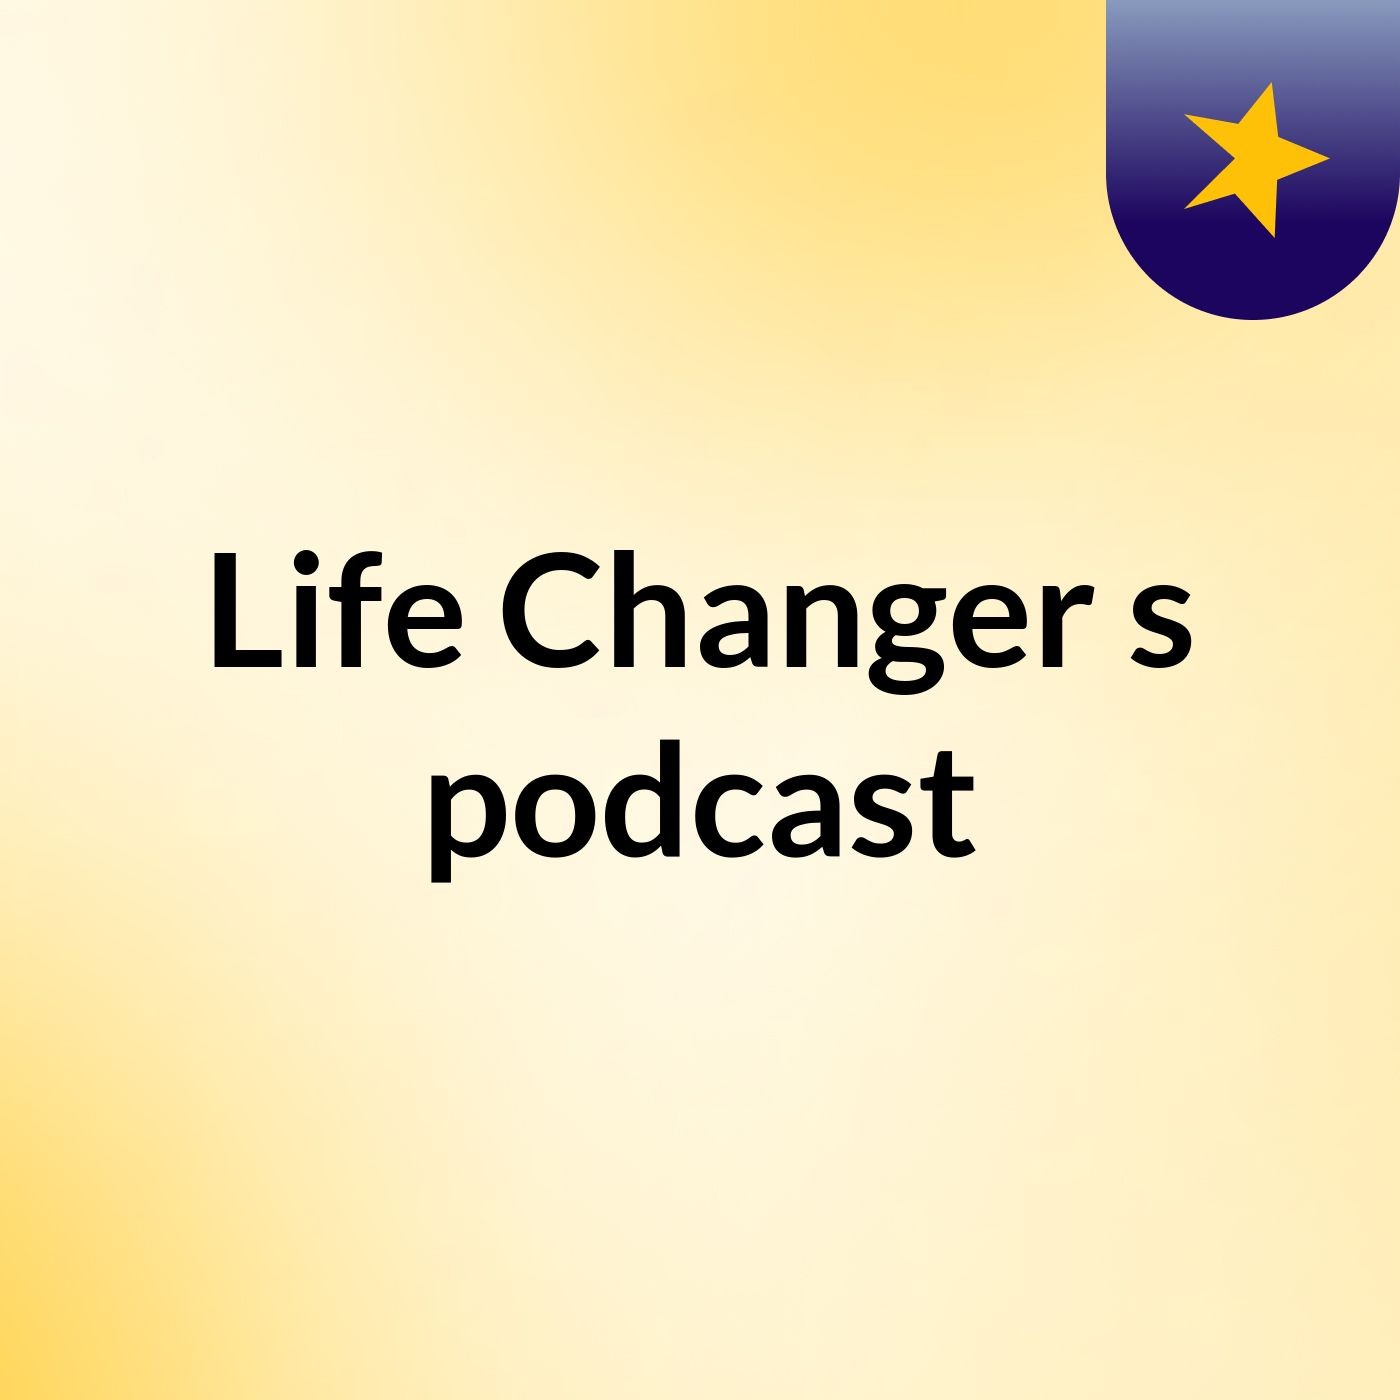 Life Changer's podcast